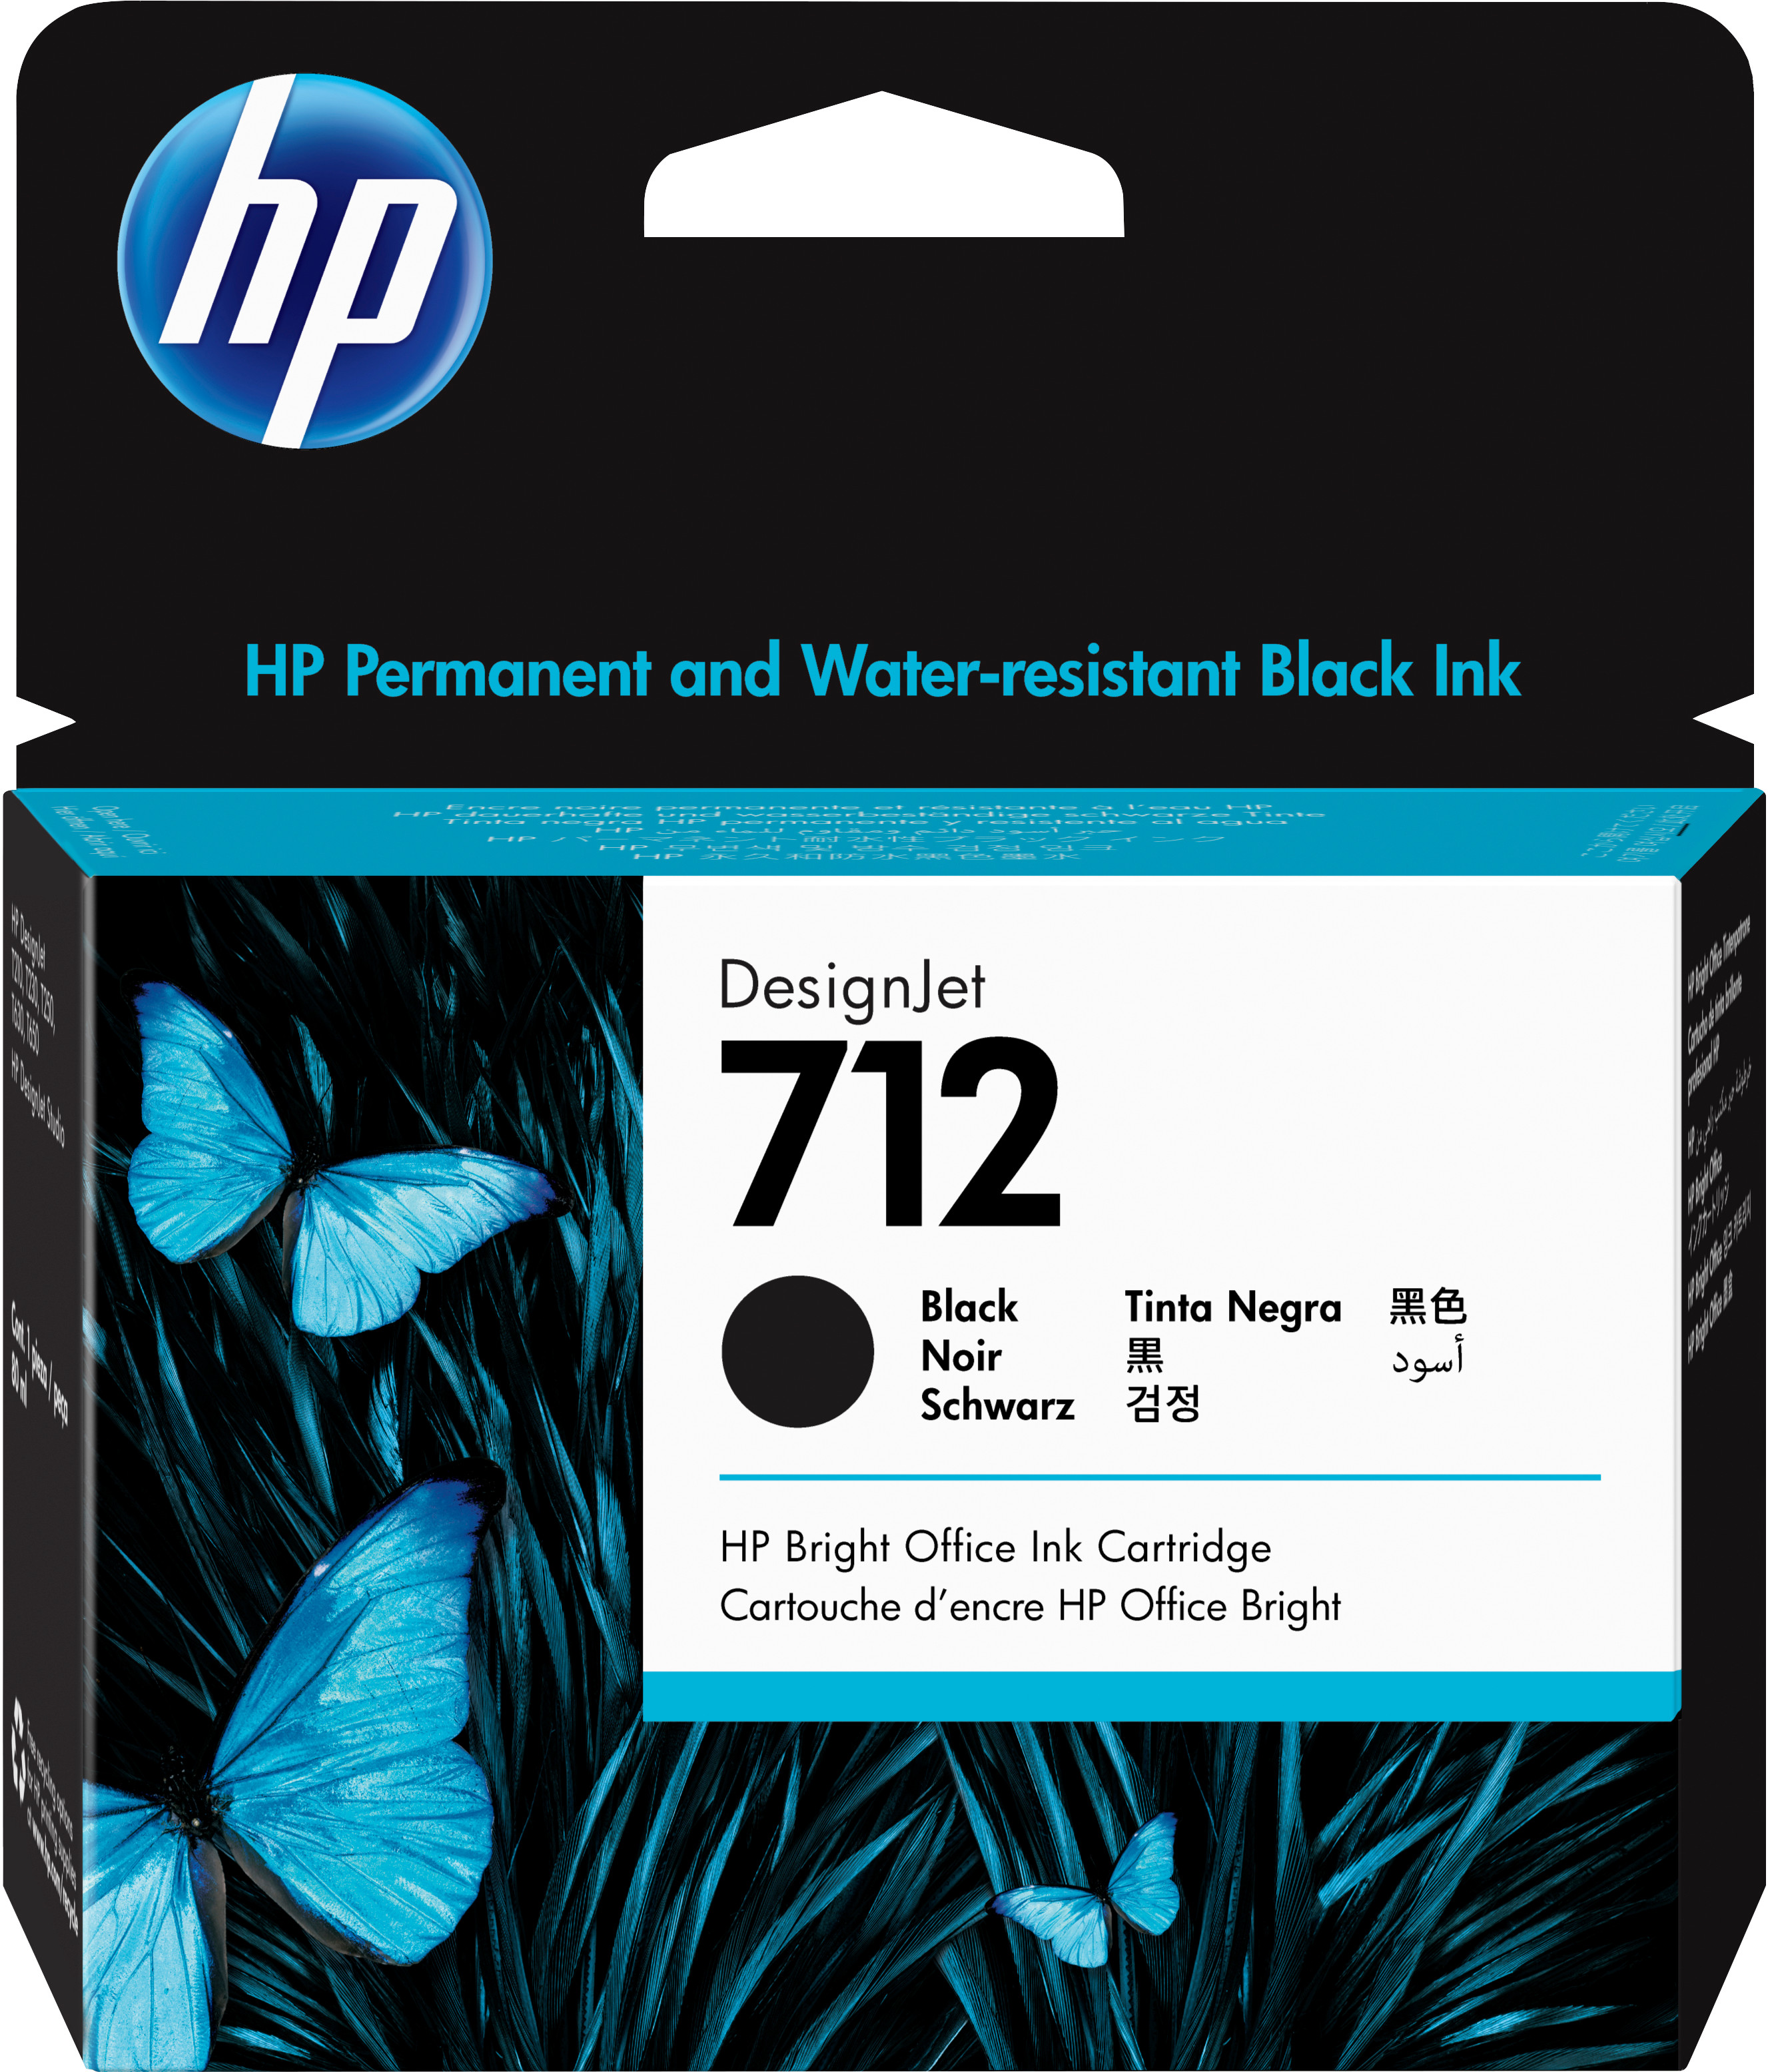 HP 953XL Noir - Cartouche d'encre grande capacité HP d'origine (L0S70AE)  prix Maroc